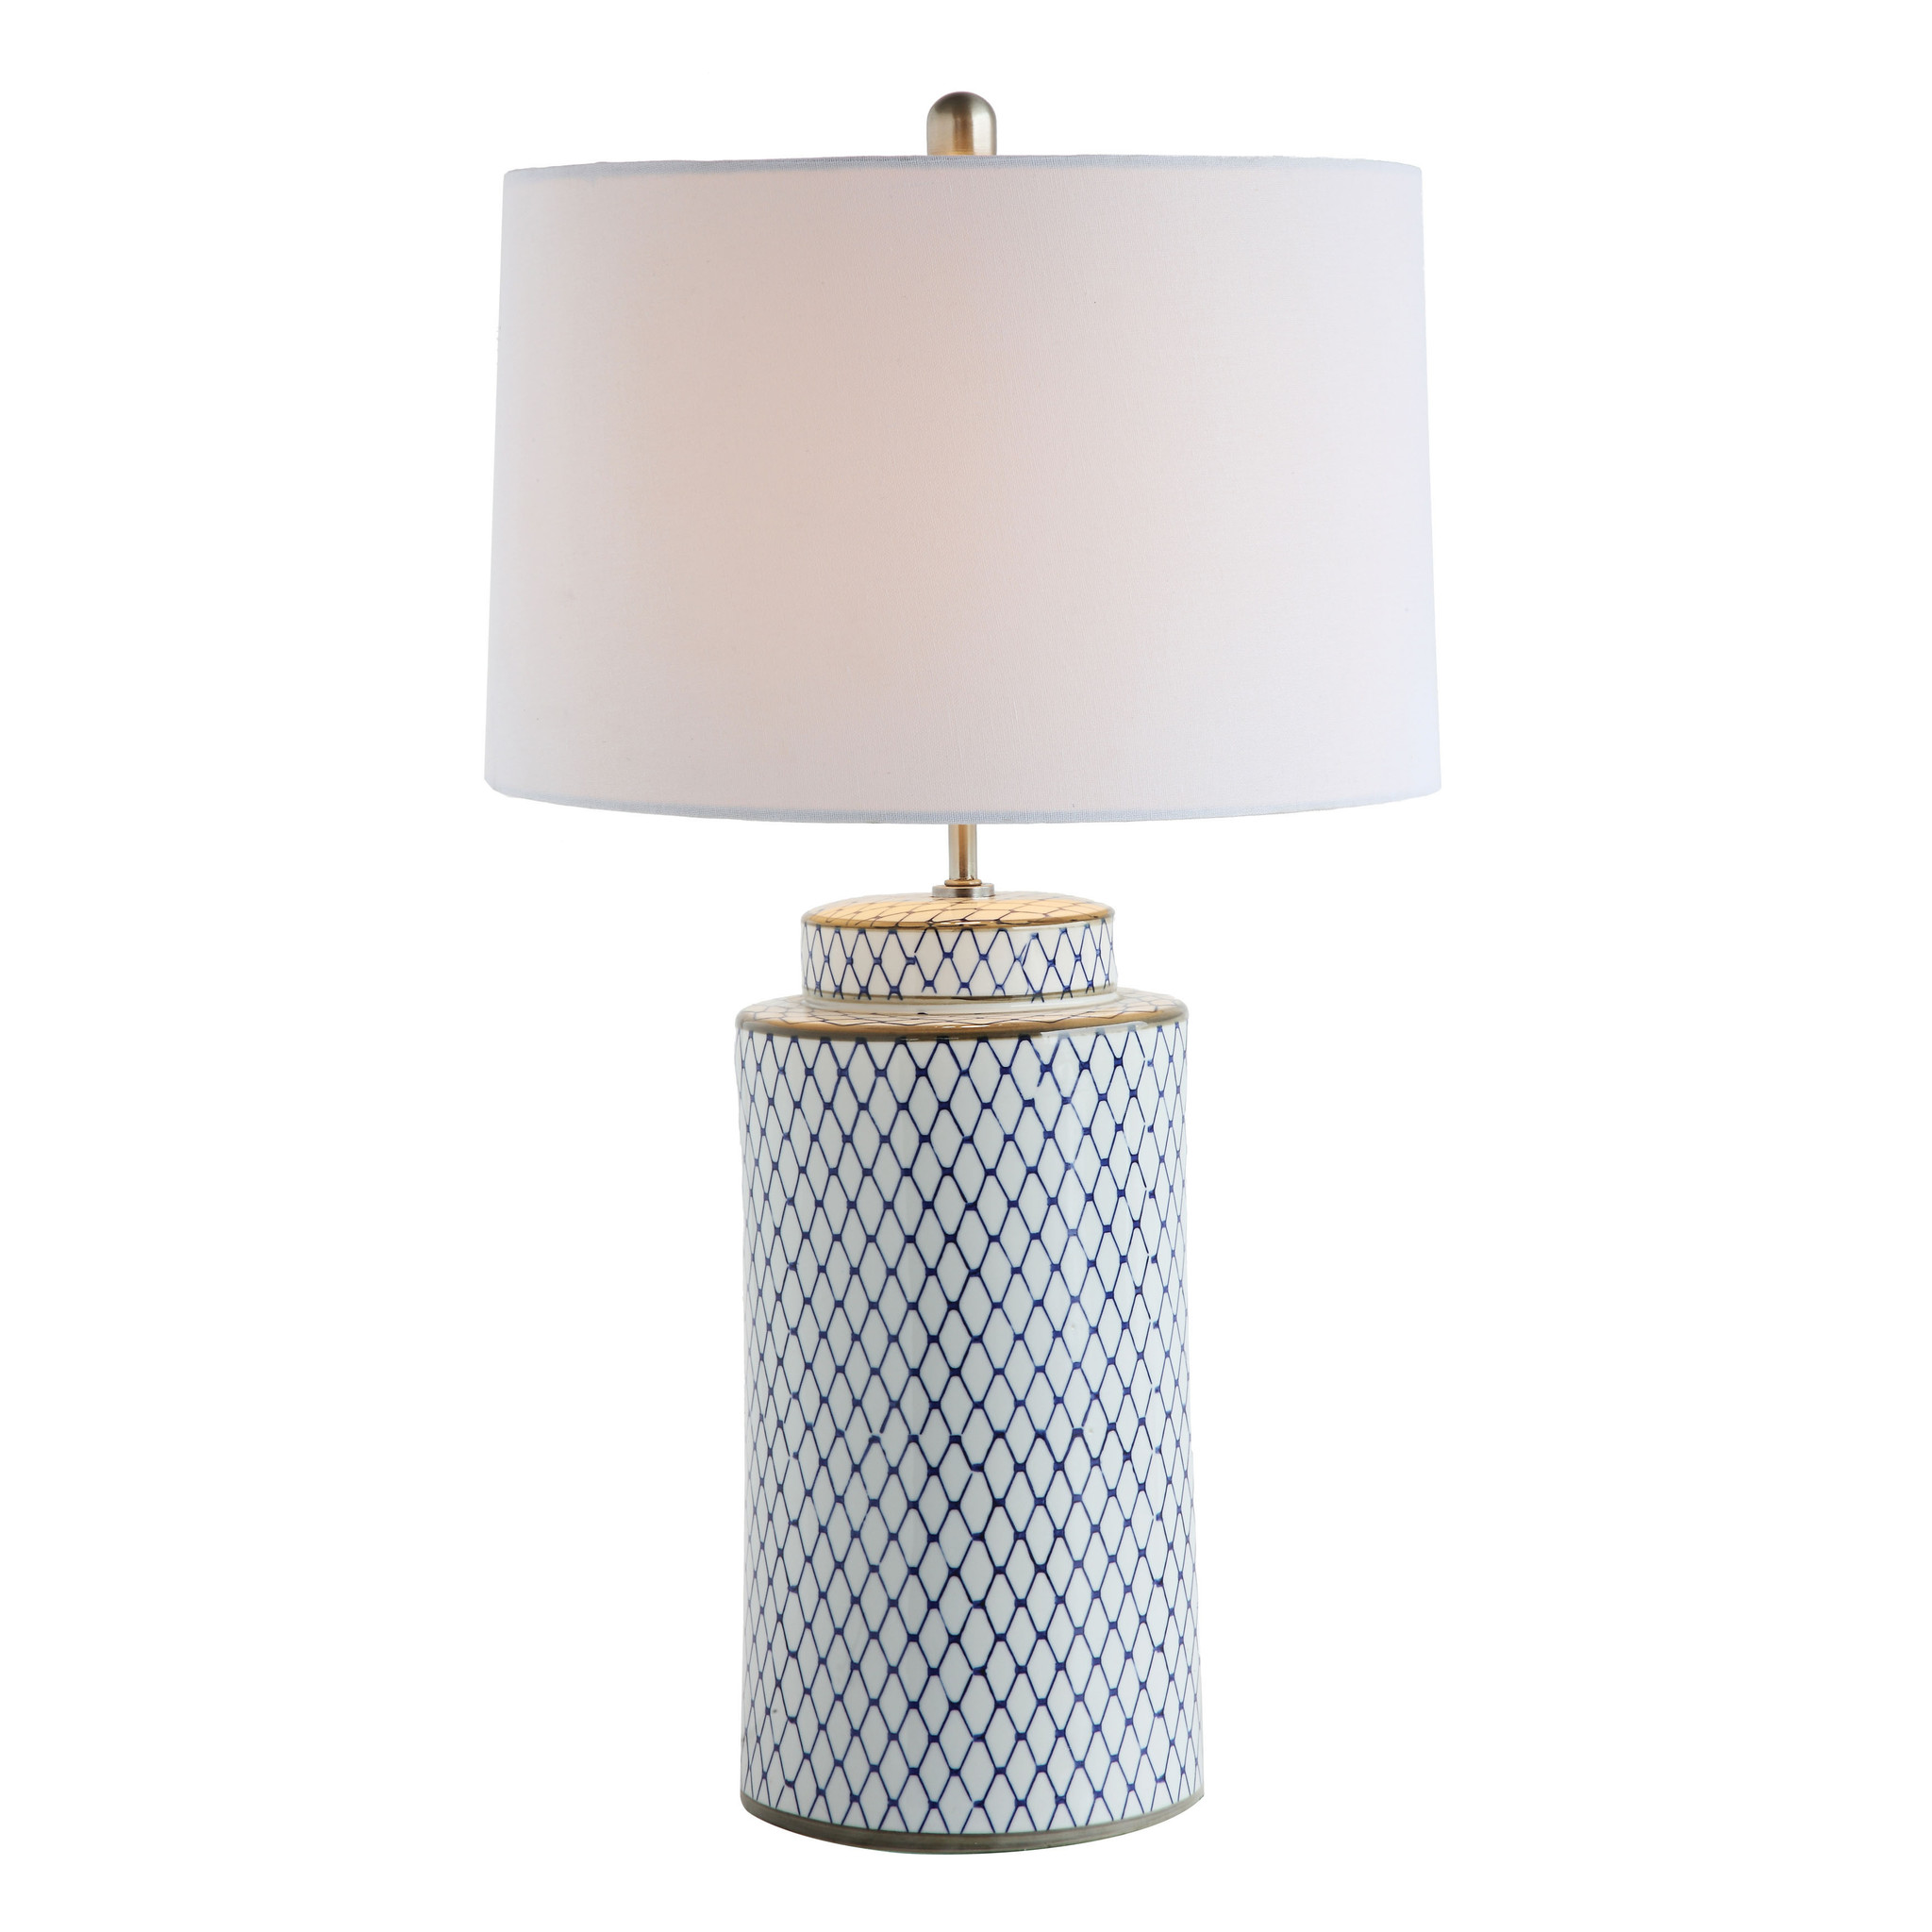 white ceramic table lamp